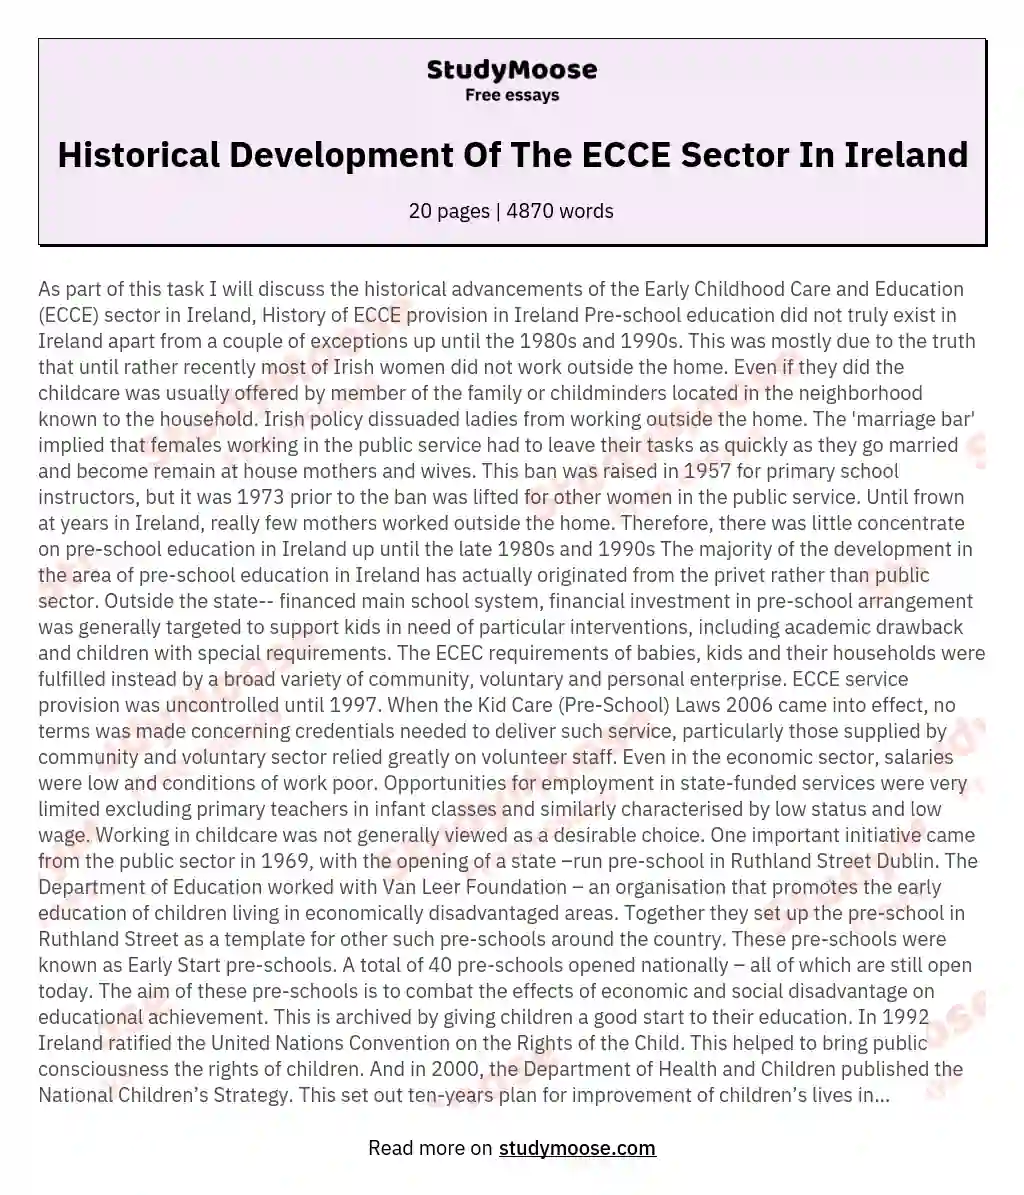 Historical Development Of The ECCE Sector In Ireland essay